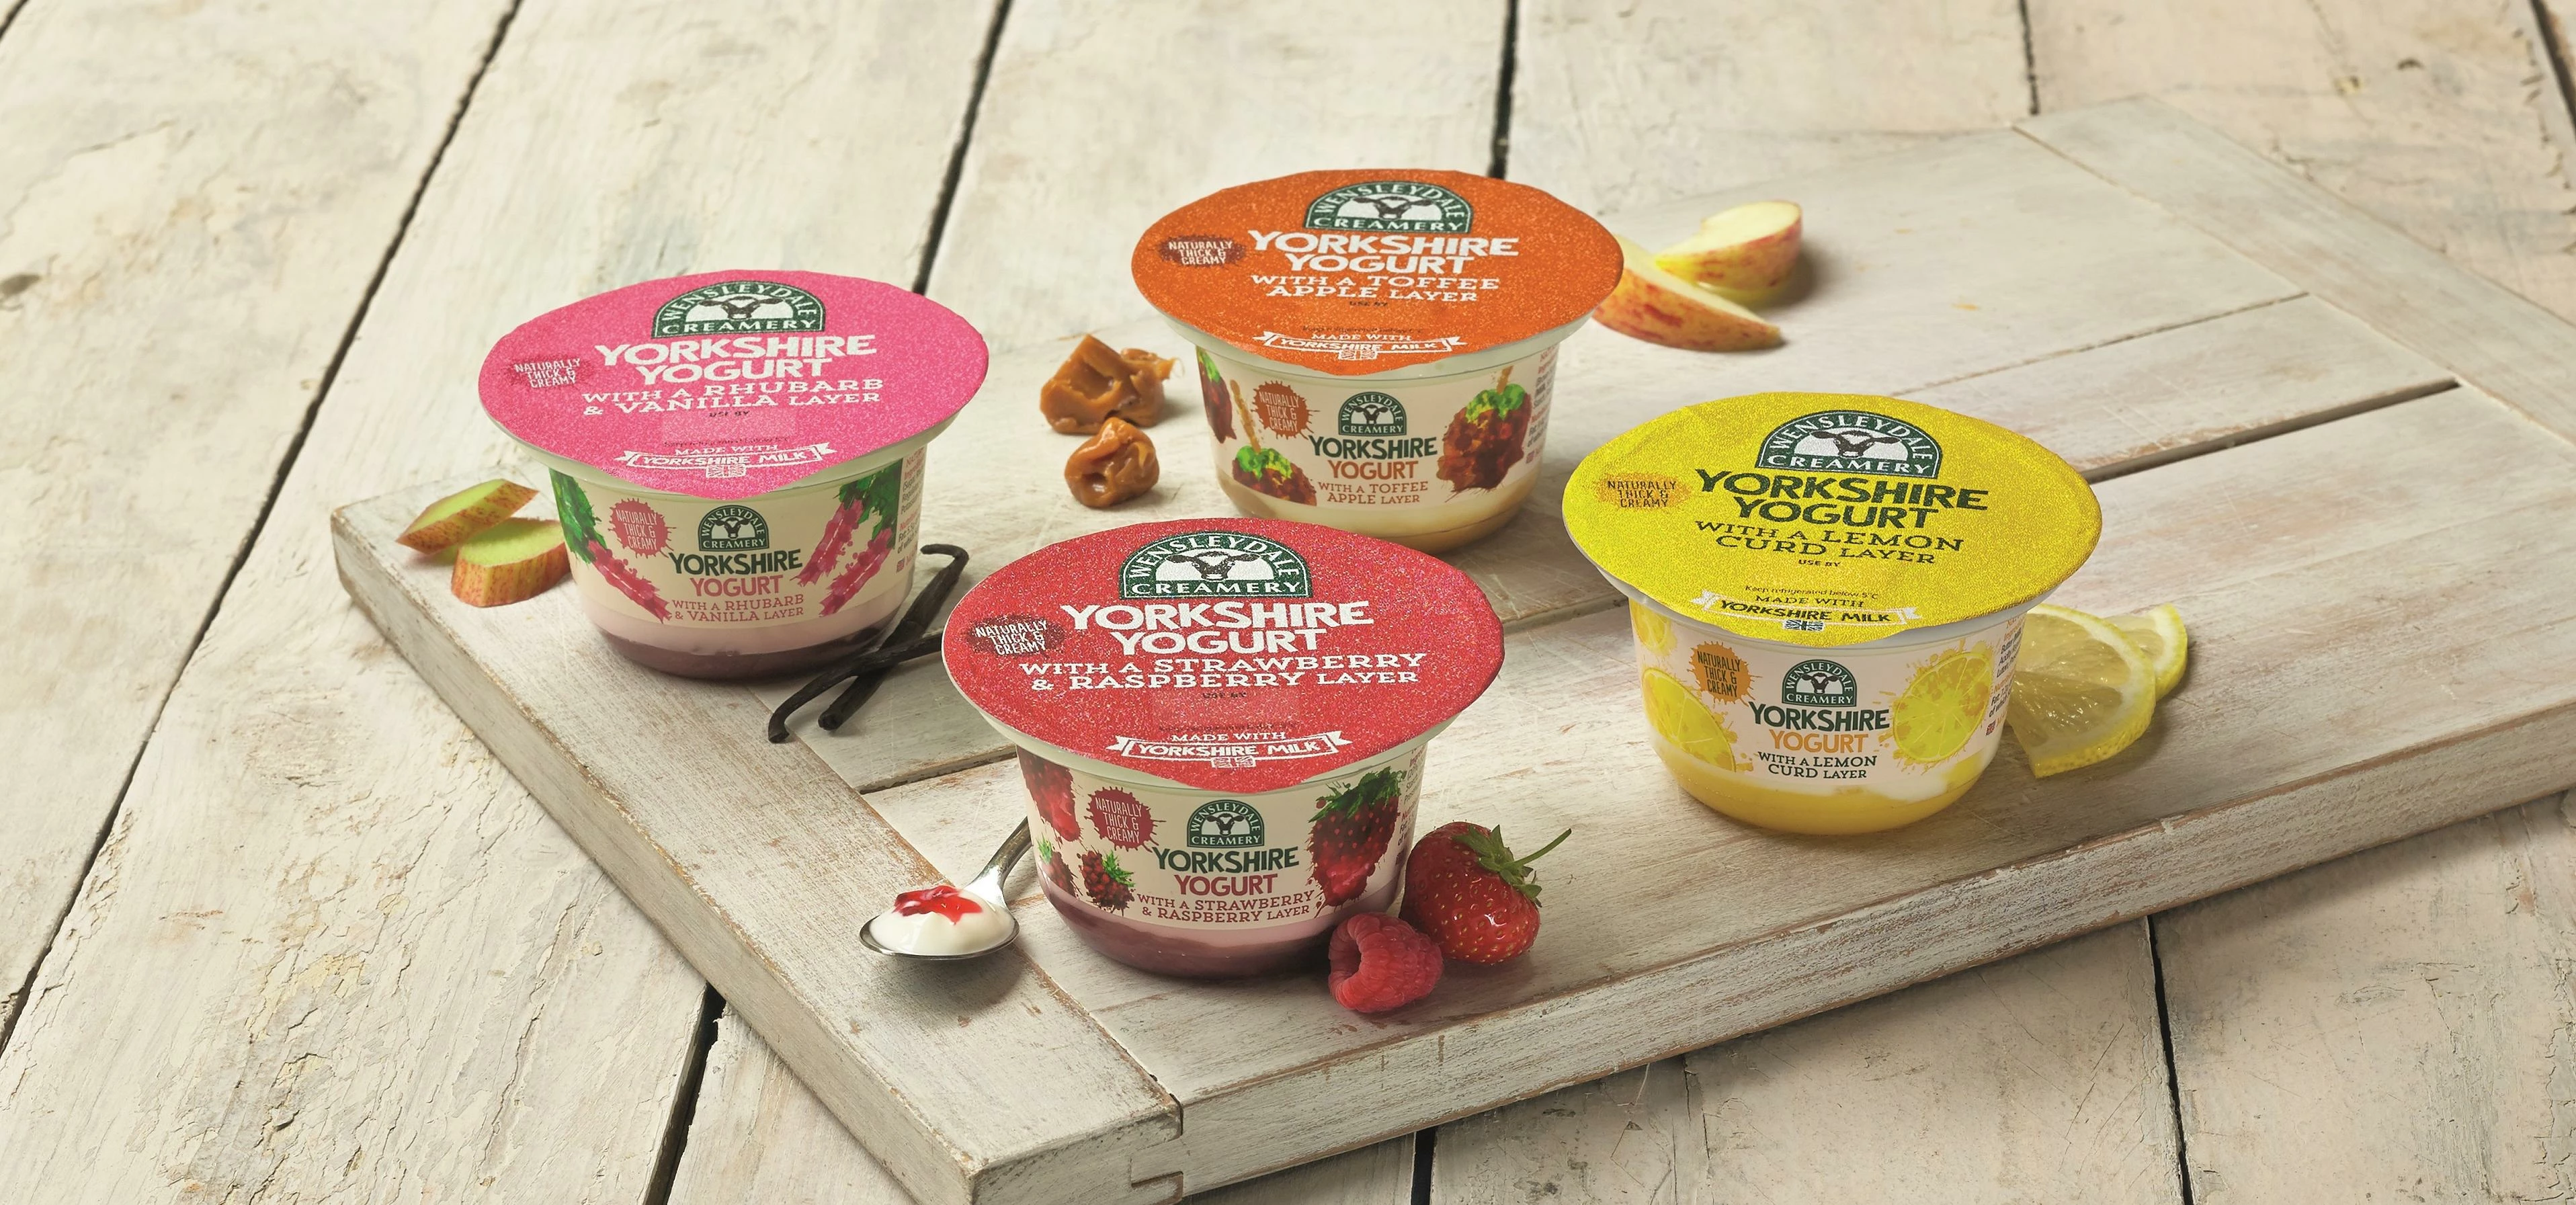 The Wensleydale Creamery's award winning Yorkshire yogurts